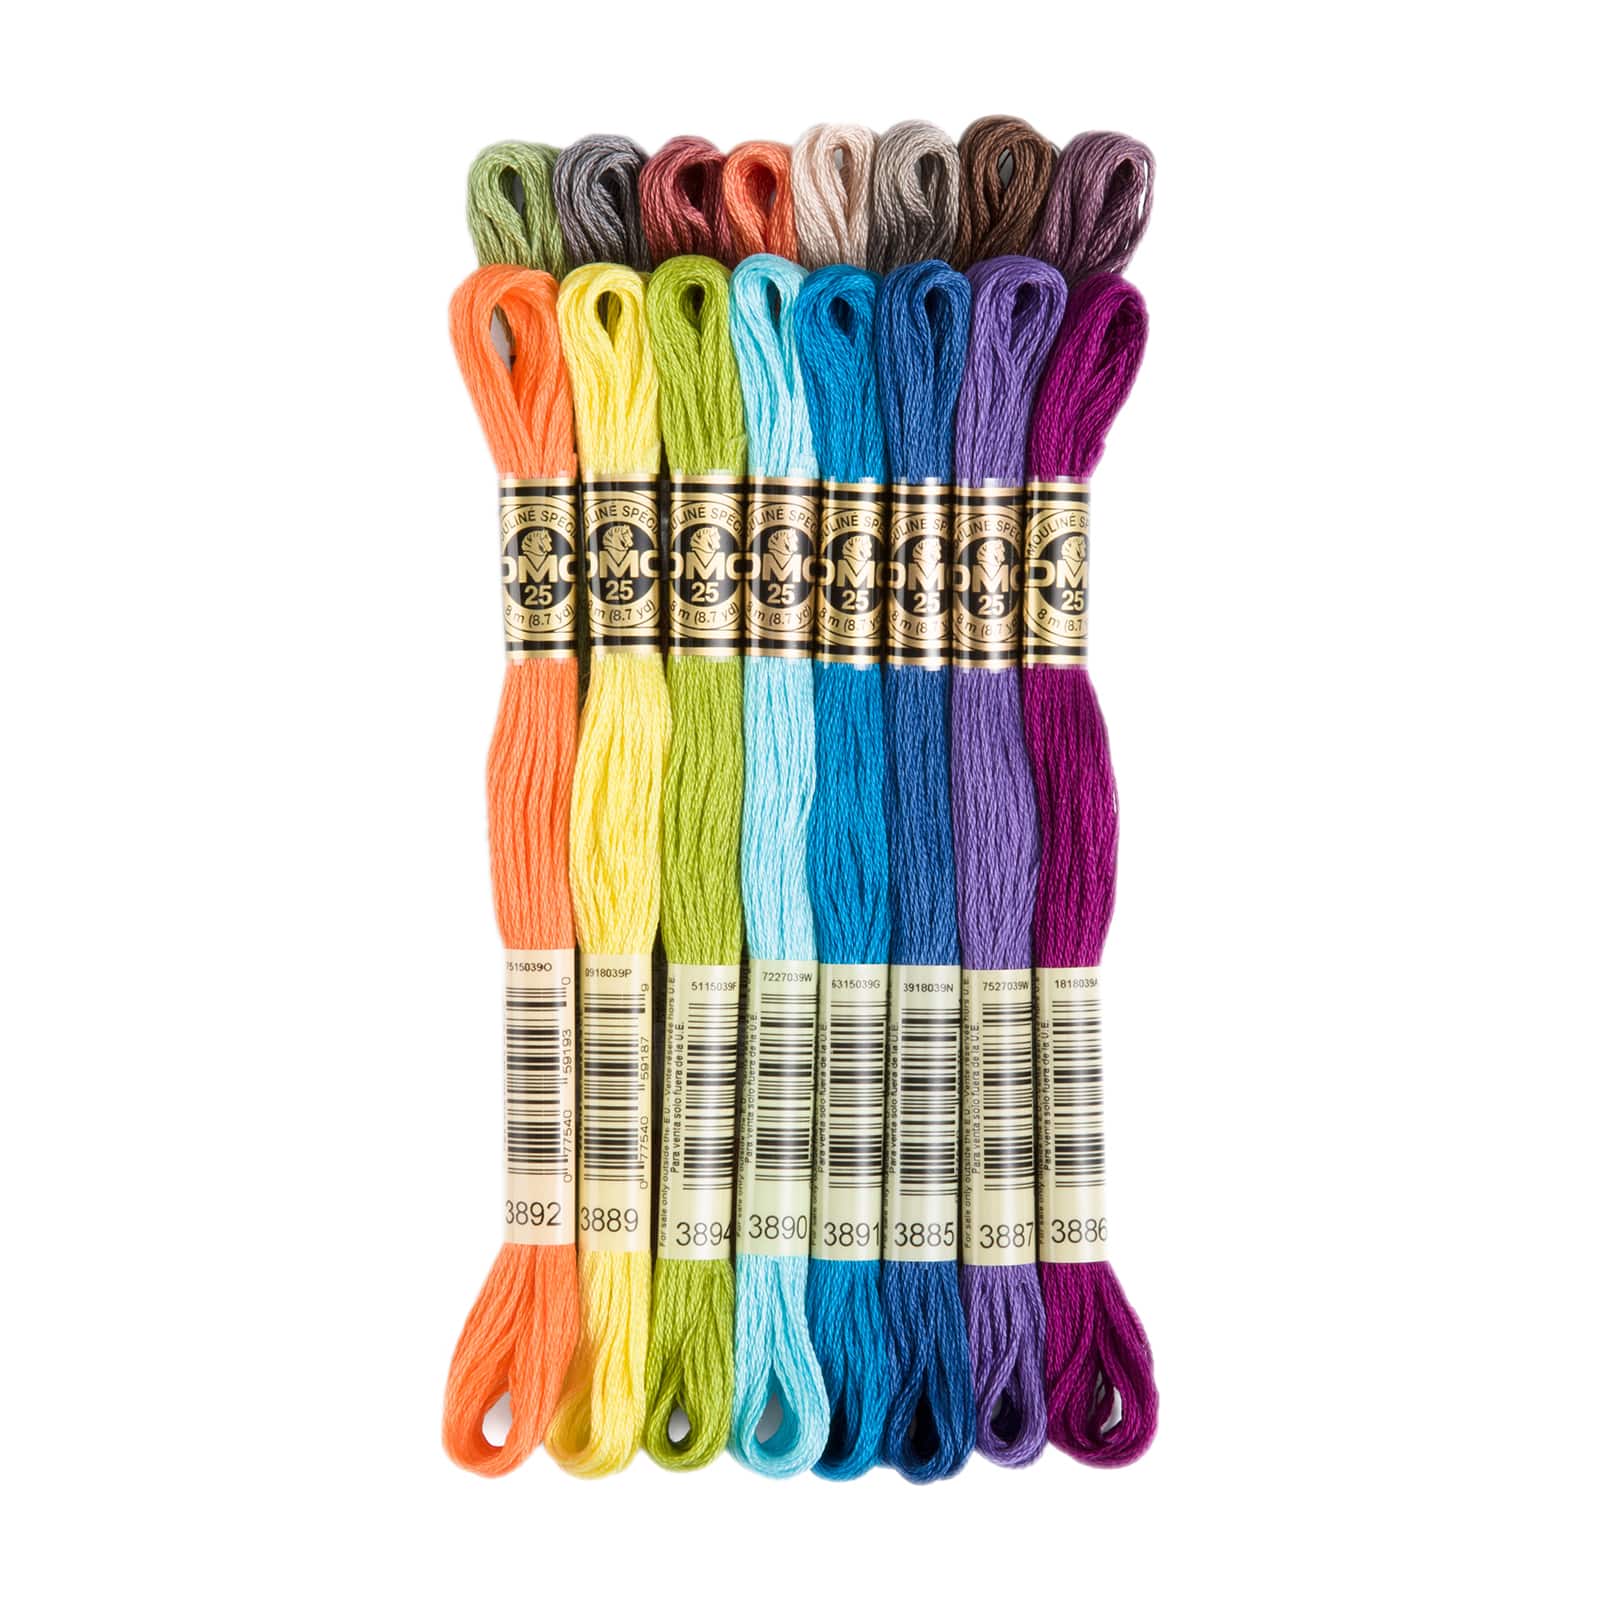 DMC Popular Colors Floss Pack - Colonial Patterns, Inc.